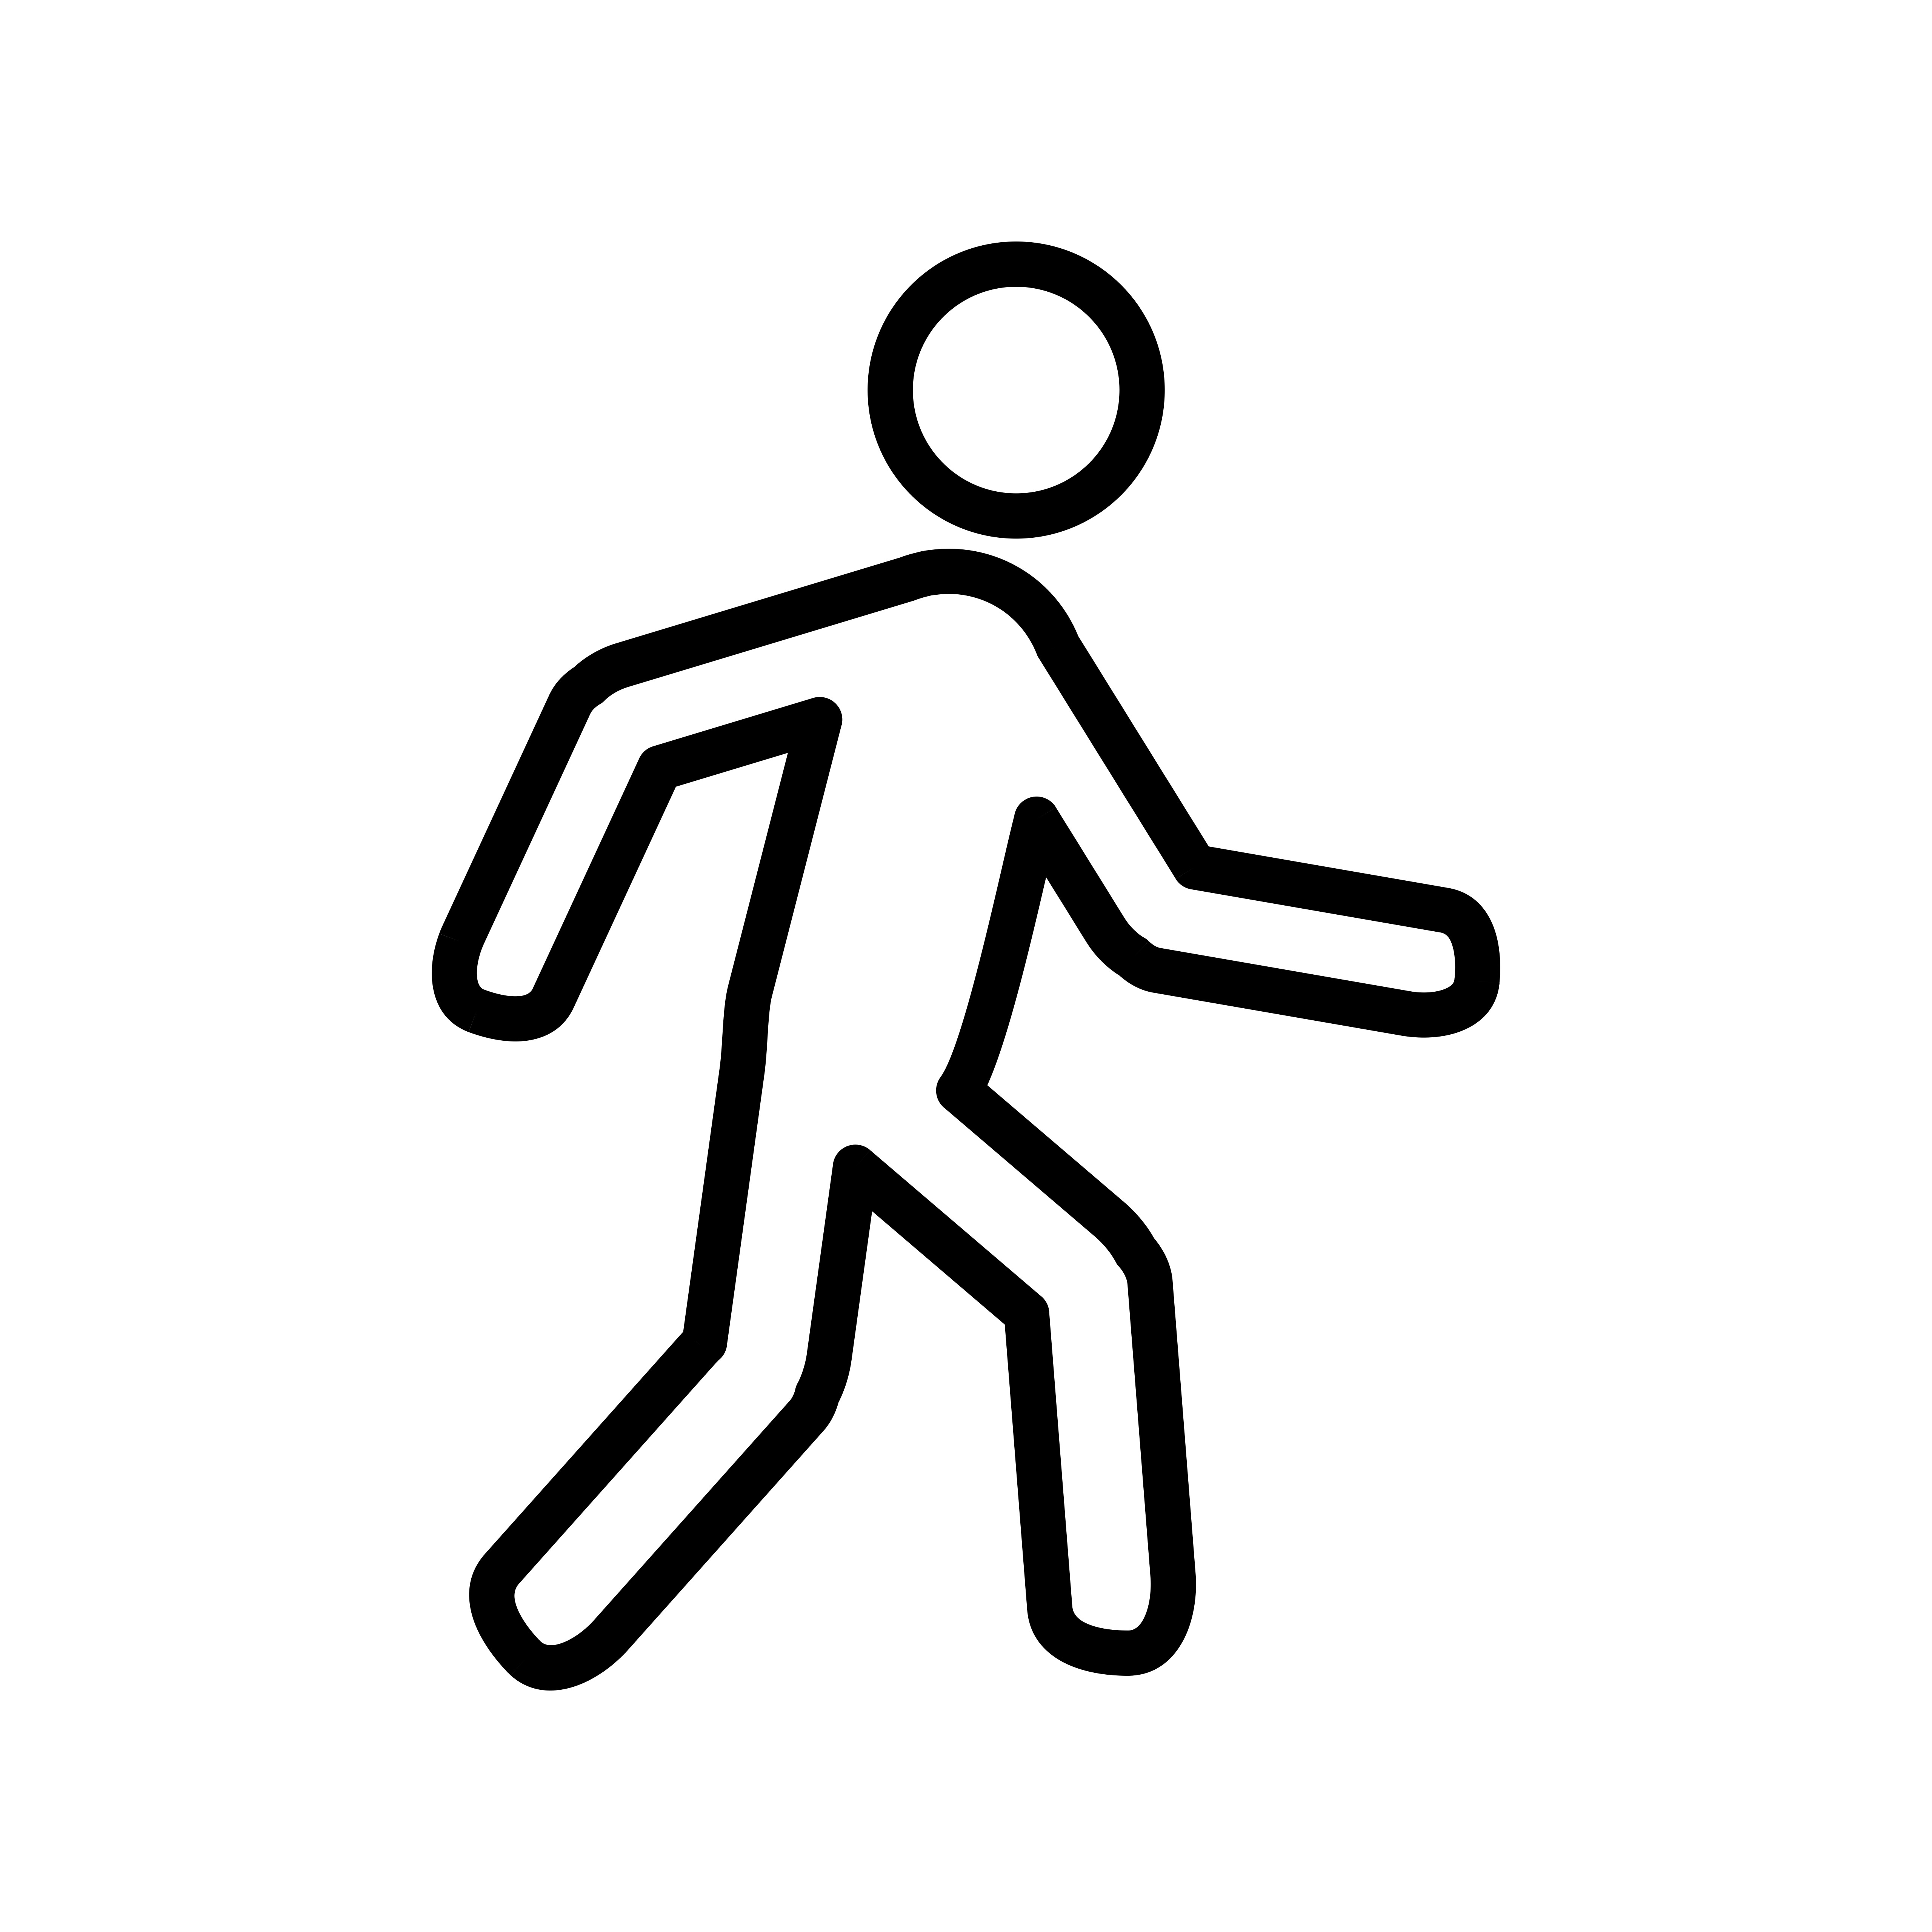 https://static.vecteezy.com/system/resources/previews/000/354/213/original/vector-walking-icon.jpg